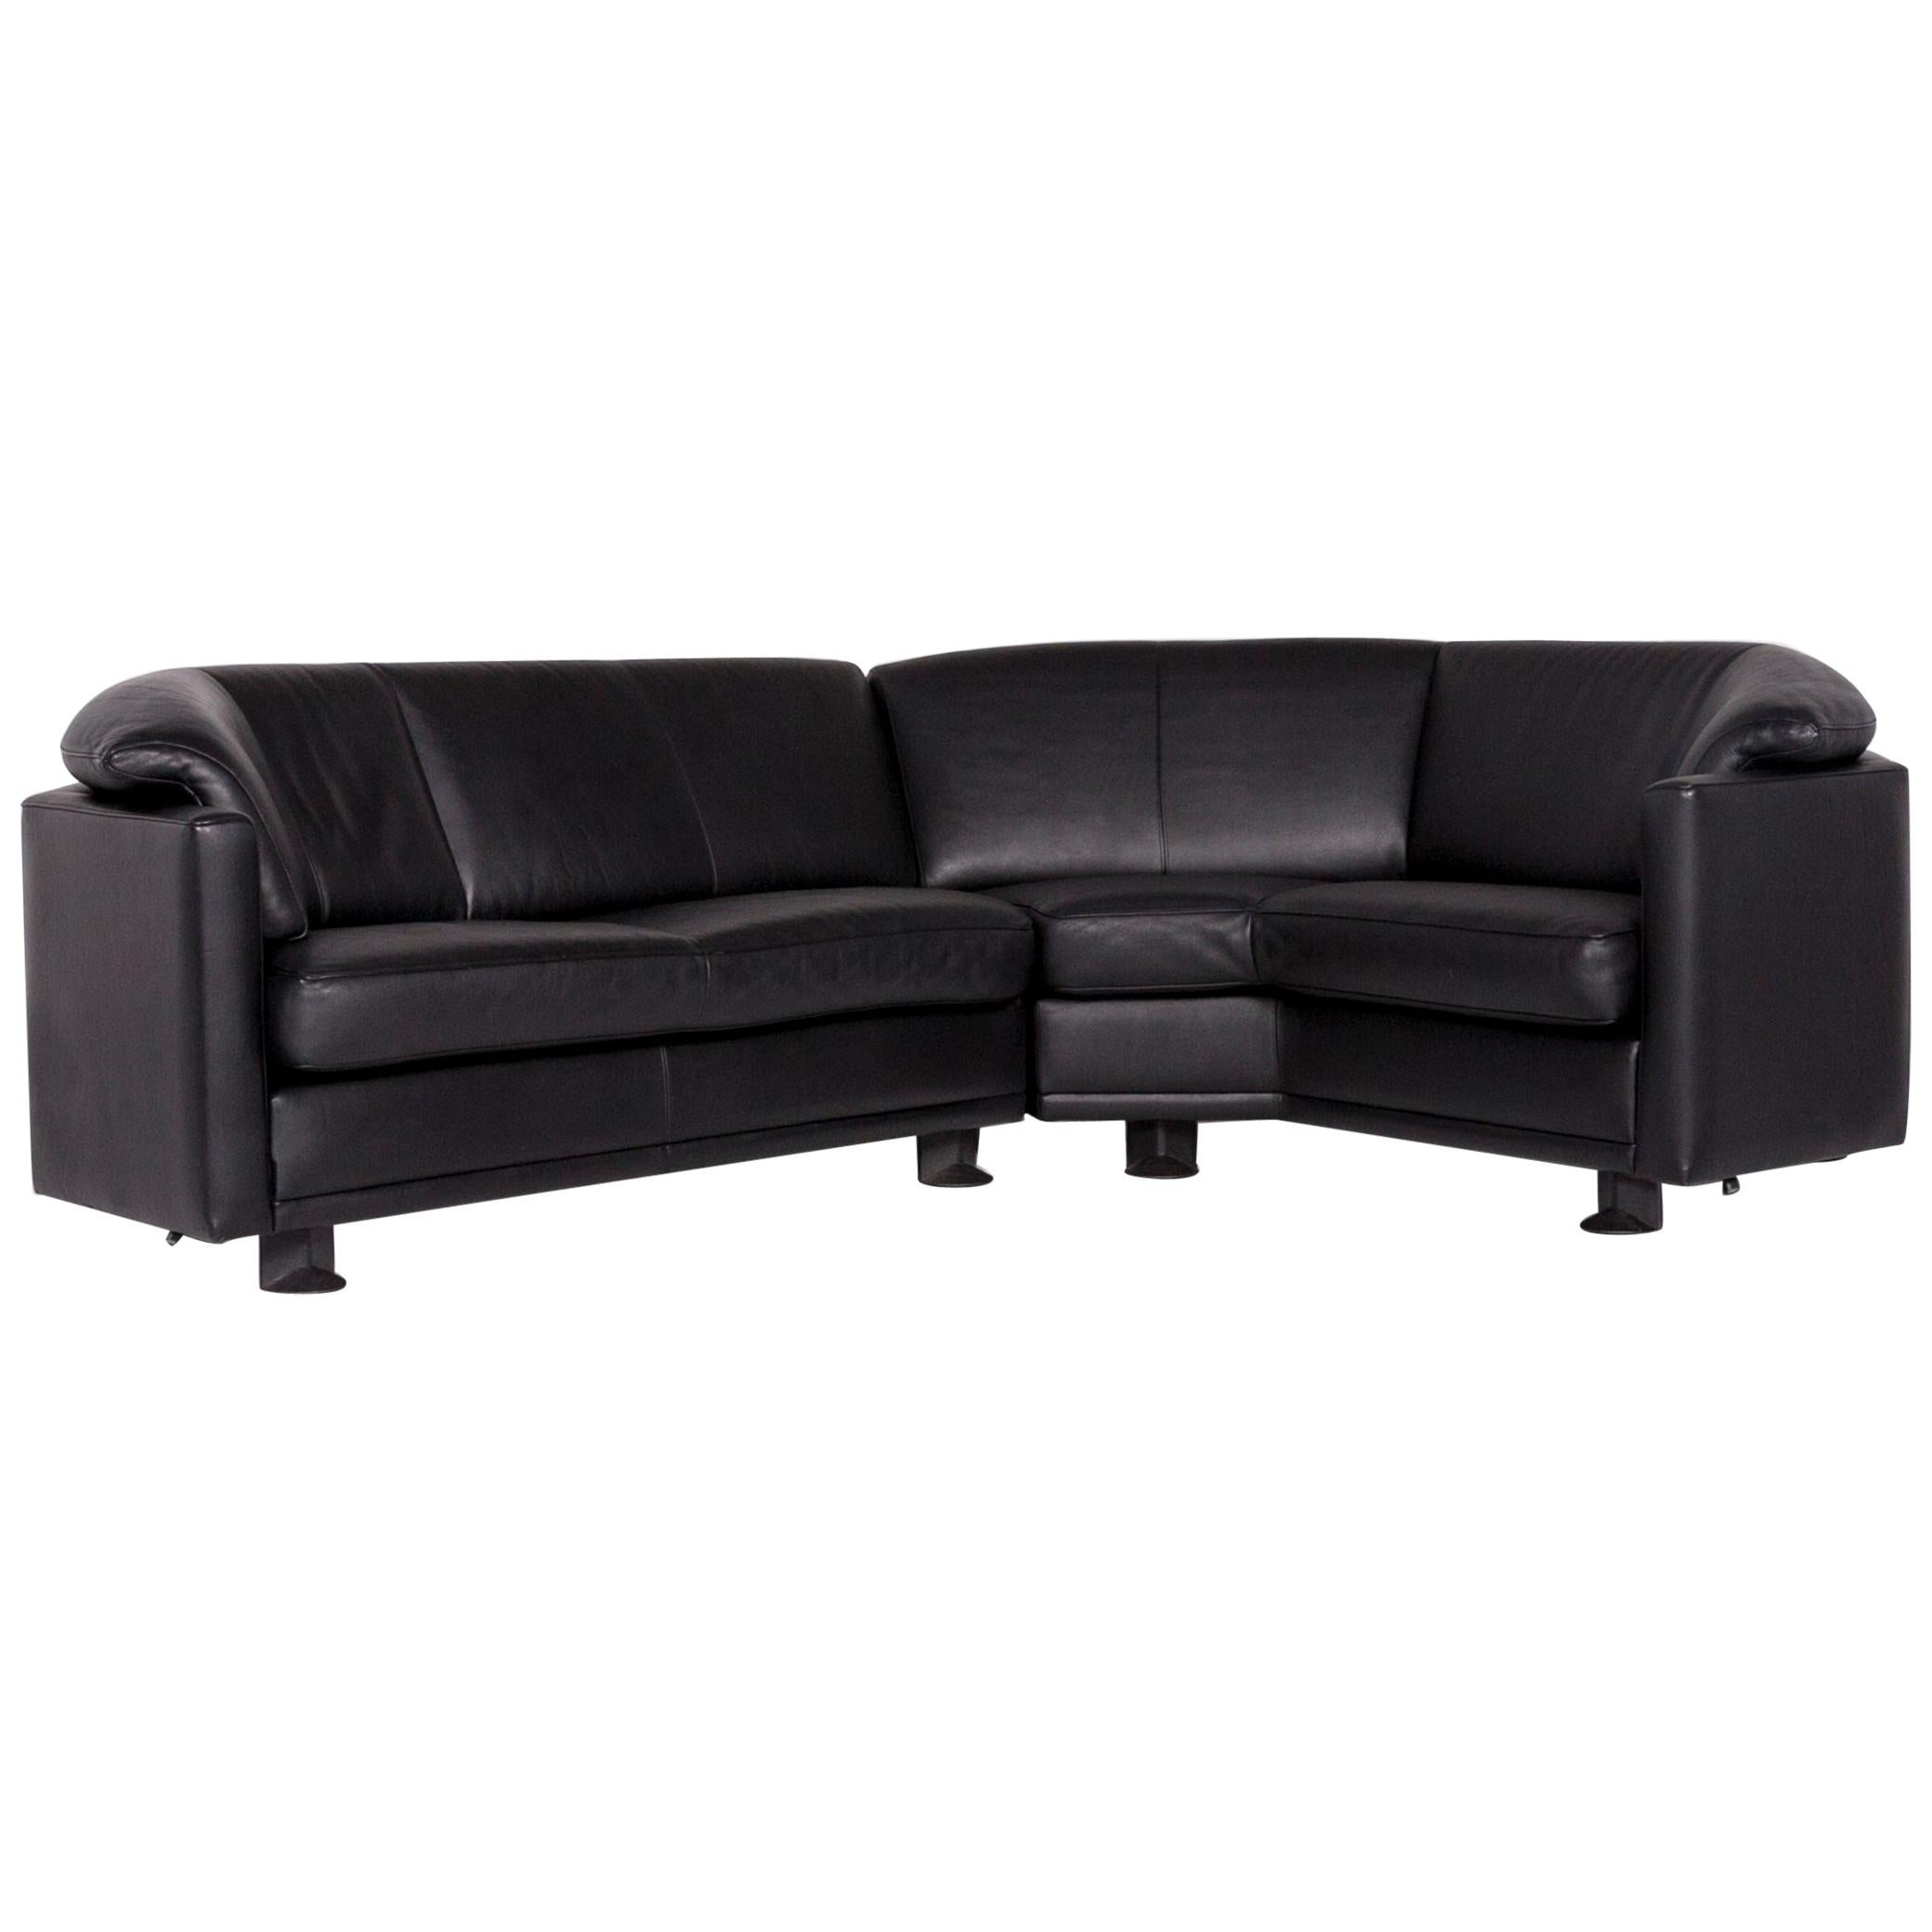 Leolux Leather Corner Sofa Black Sofa Couch For Sale